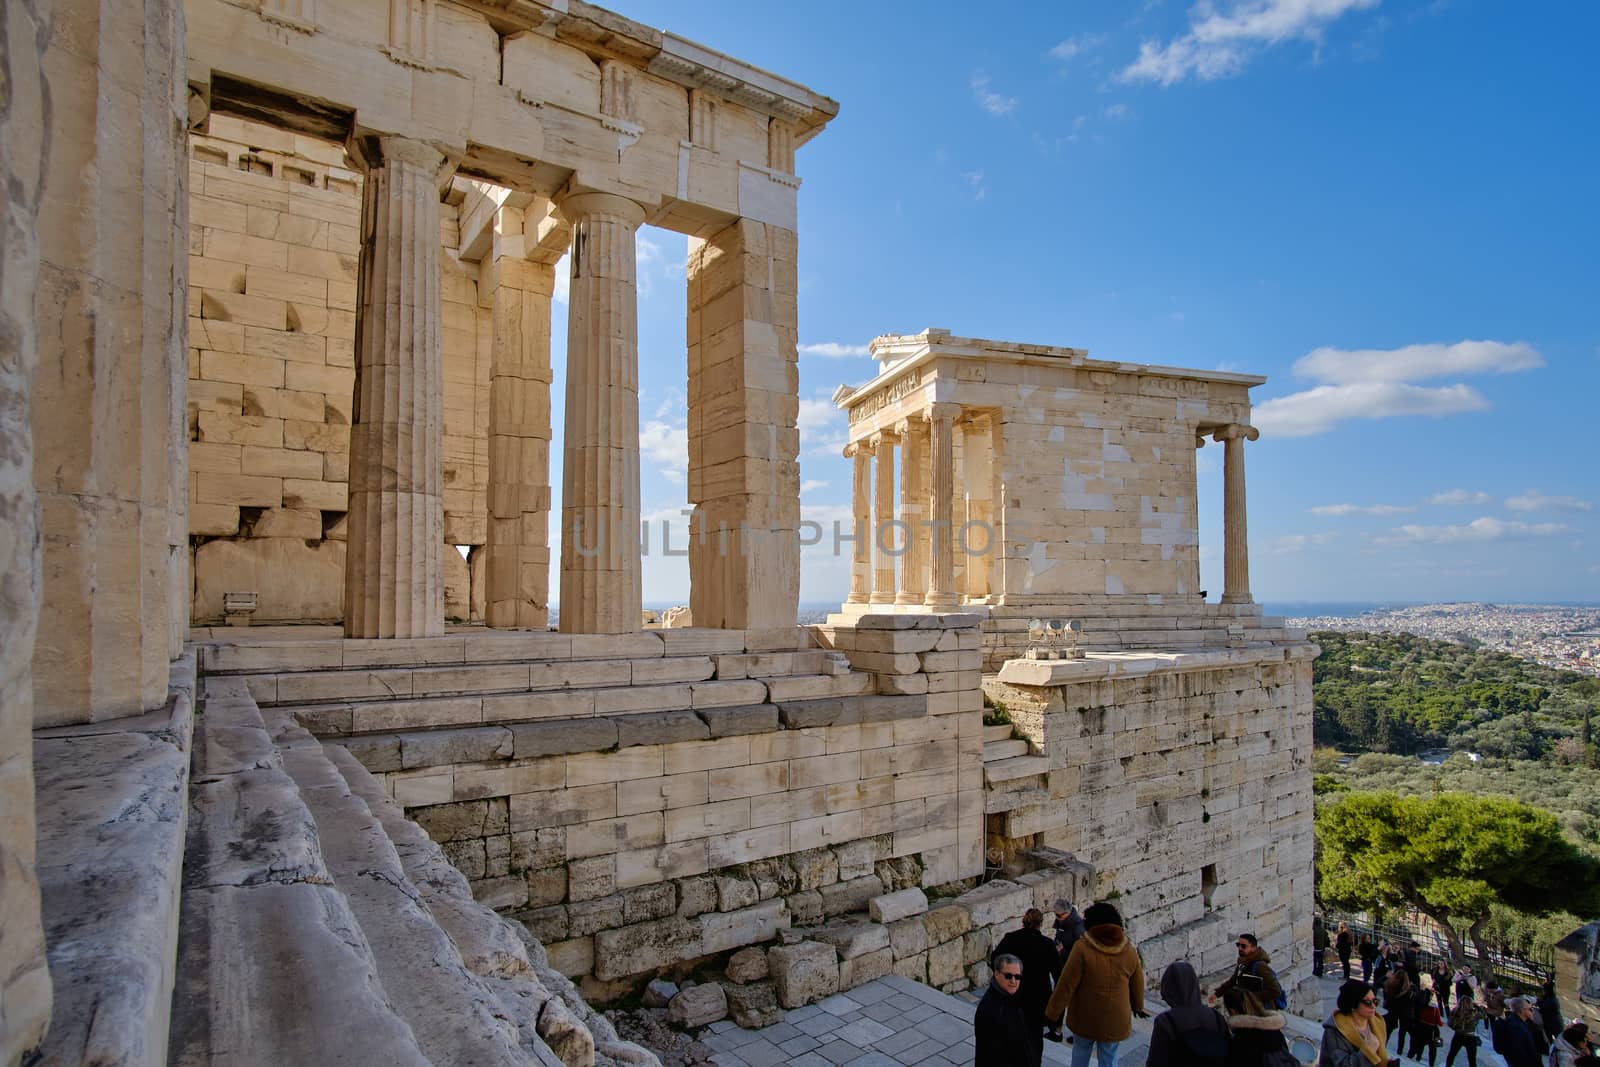 Athens, Greece - FEB 16, 2020 - Propylaea. The imposing entrance to the Acropolis.